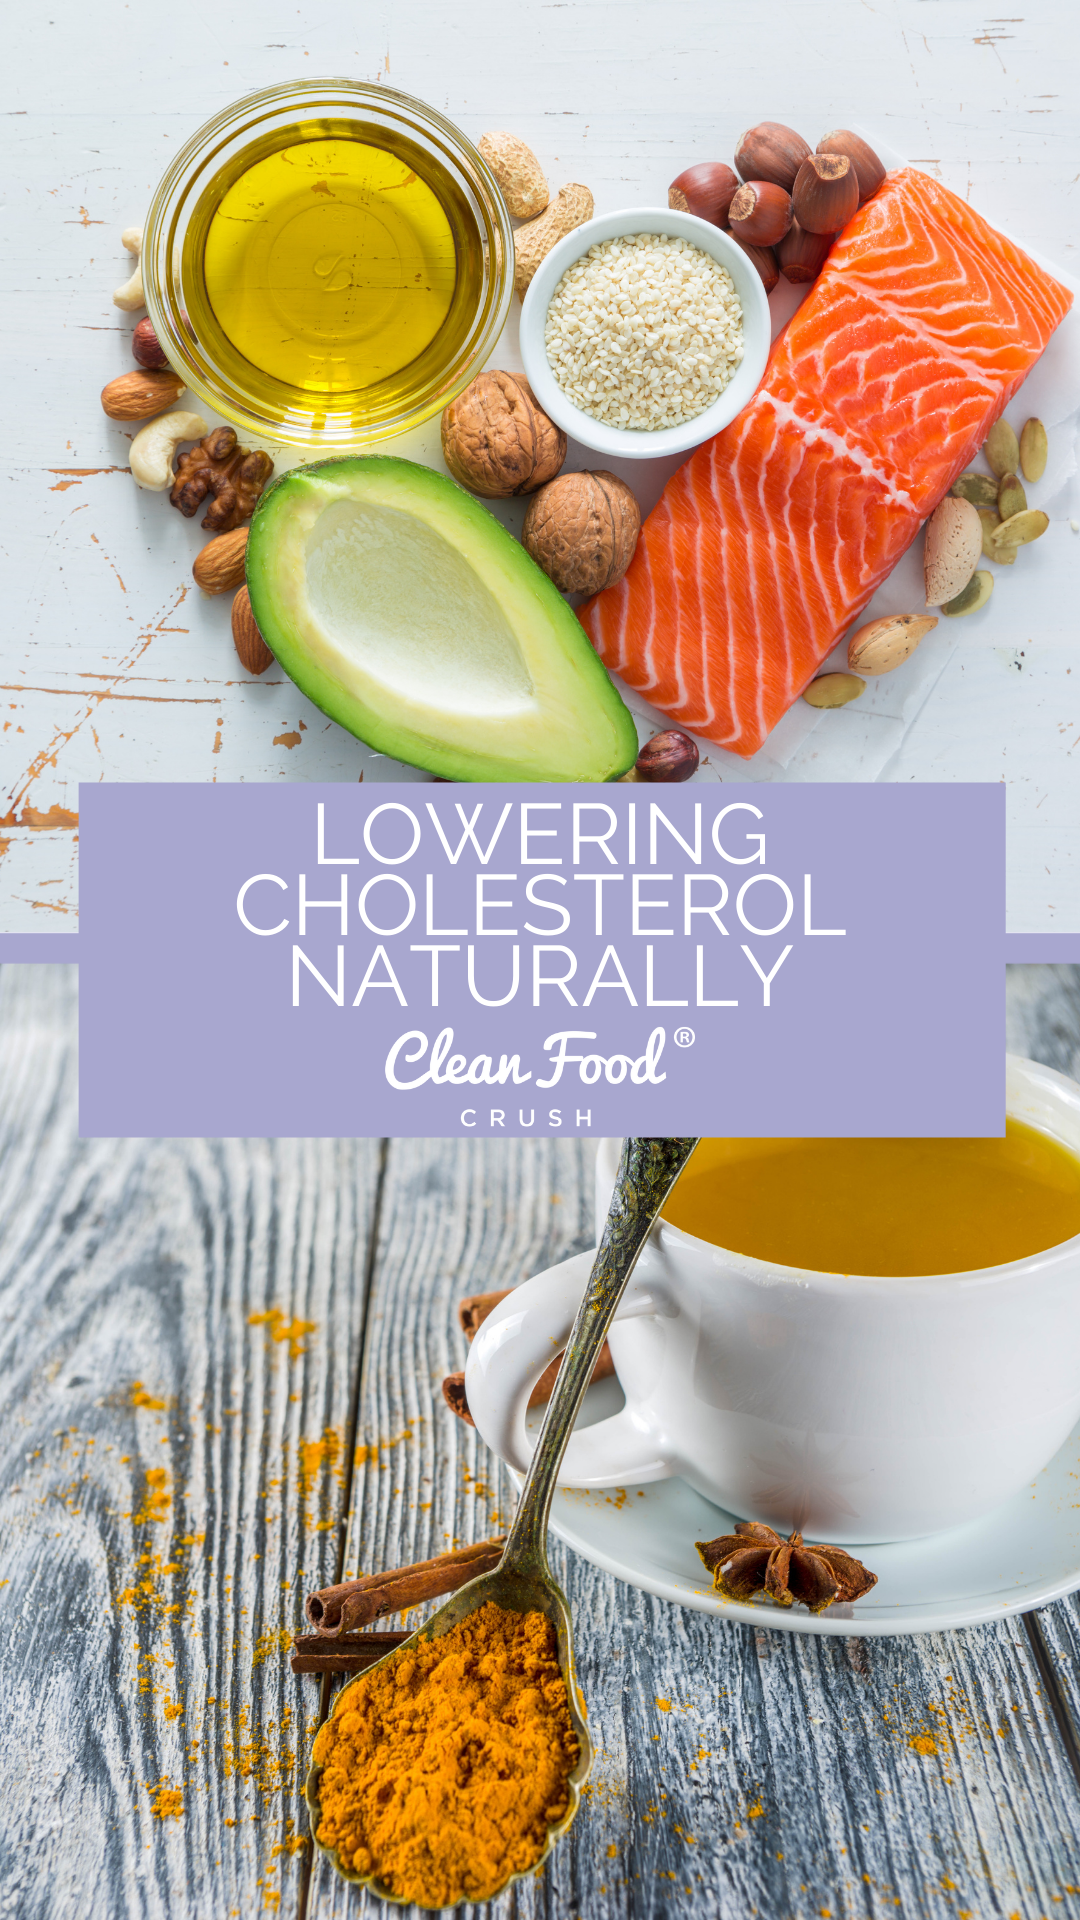 Lower cholesterol naturally